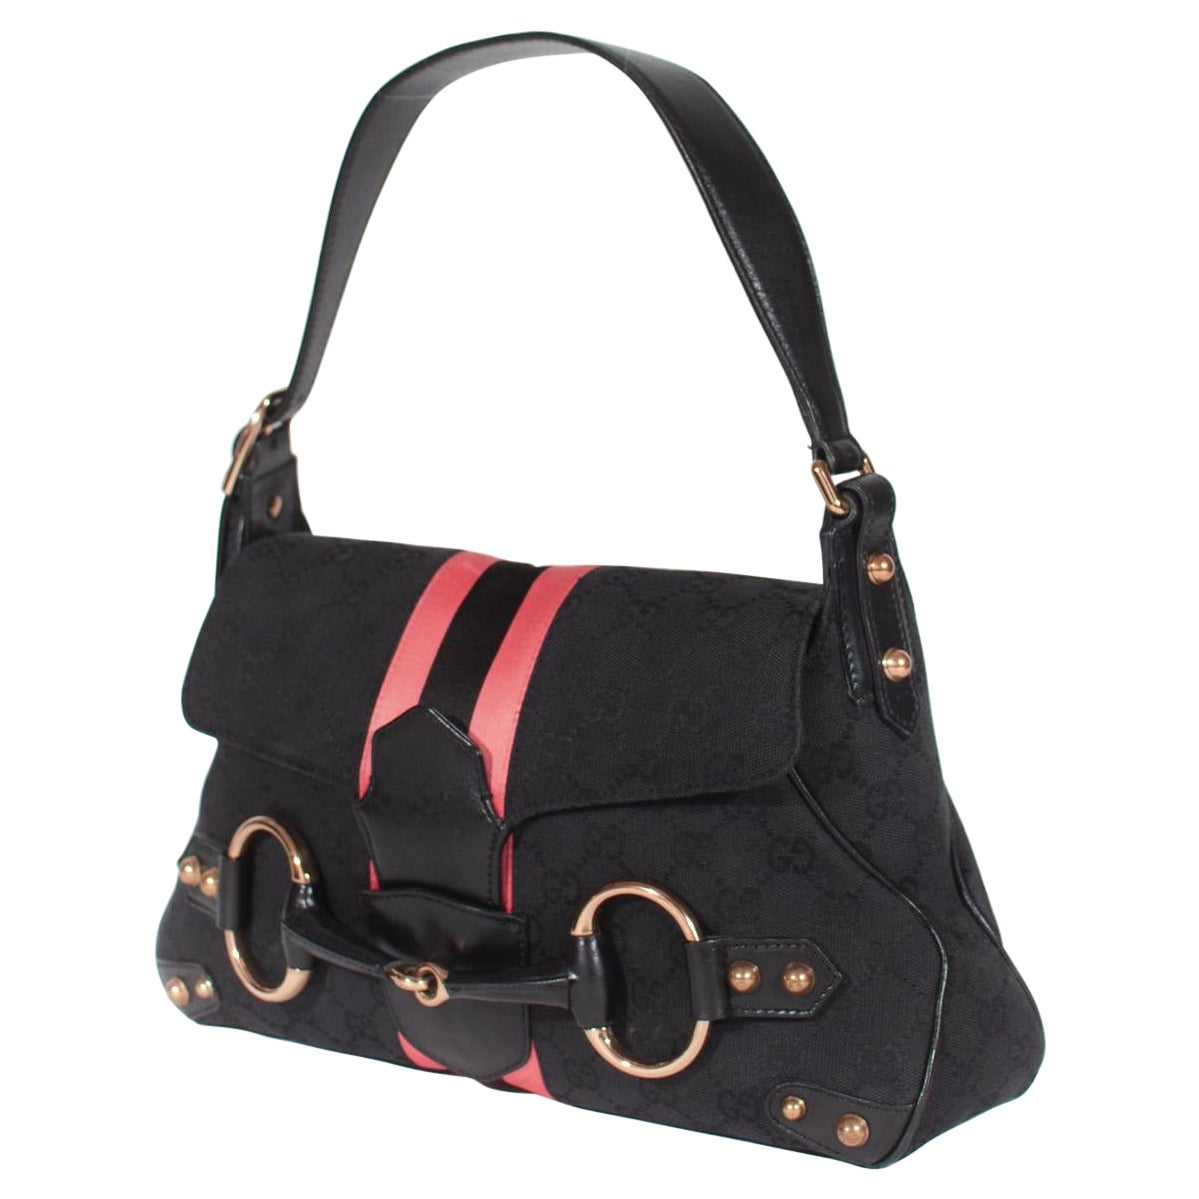 S/S 2004 Gucci by Tom Ford Black GG Horsebit Shoulder Bag with Pink Satin Stripe For Sale